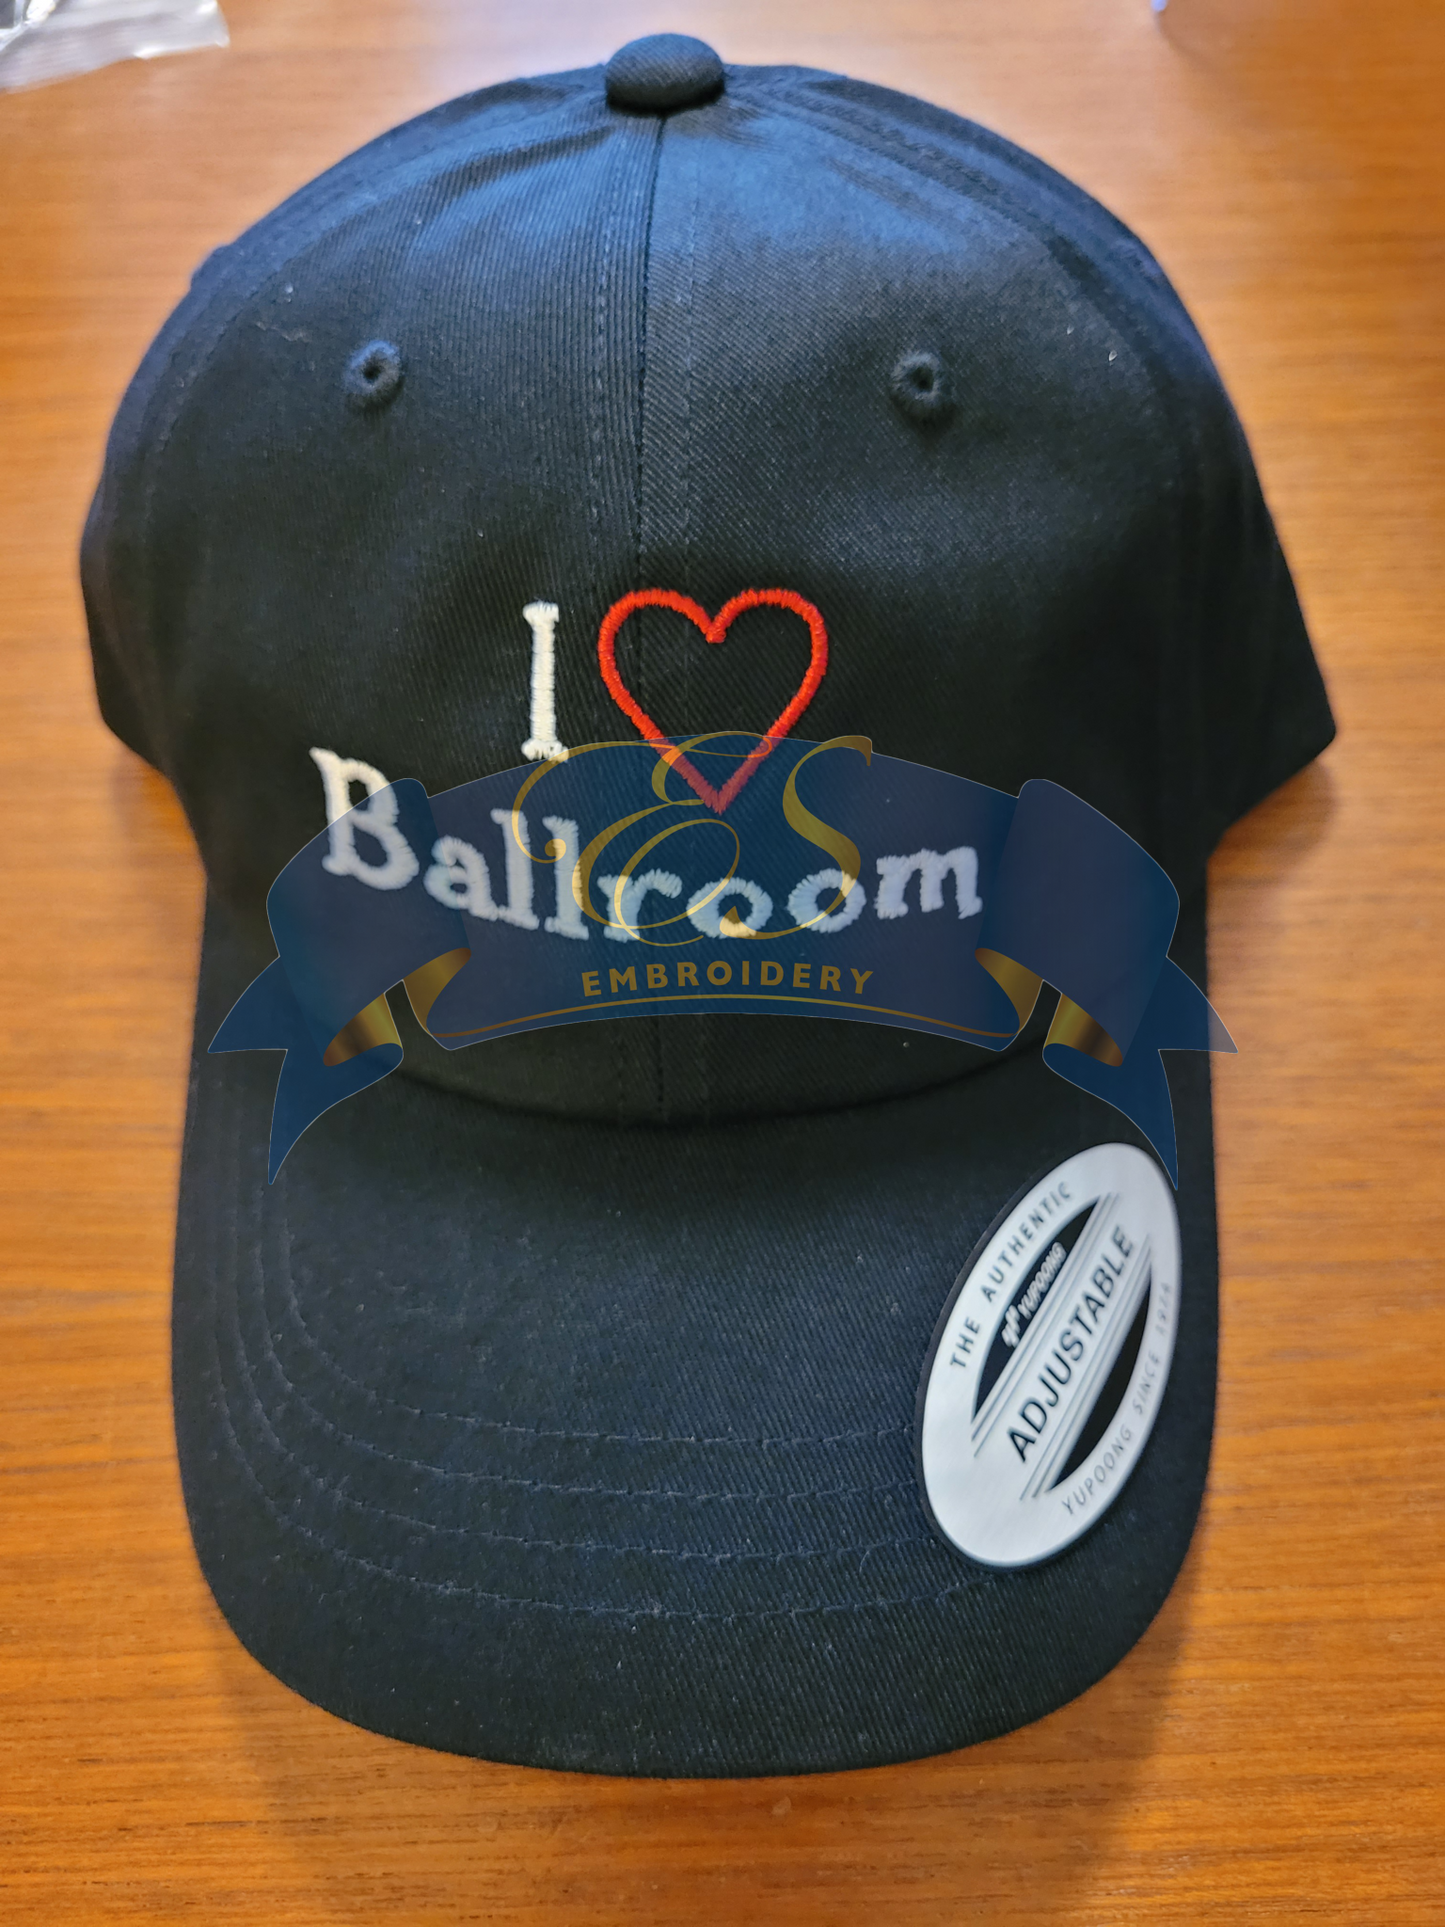 I <3 Ballroom Hat